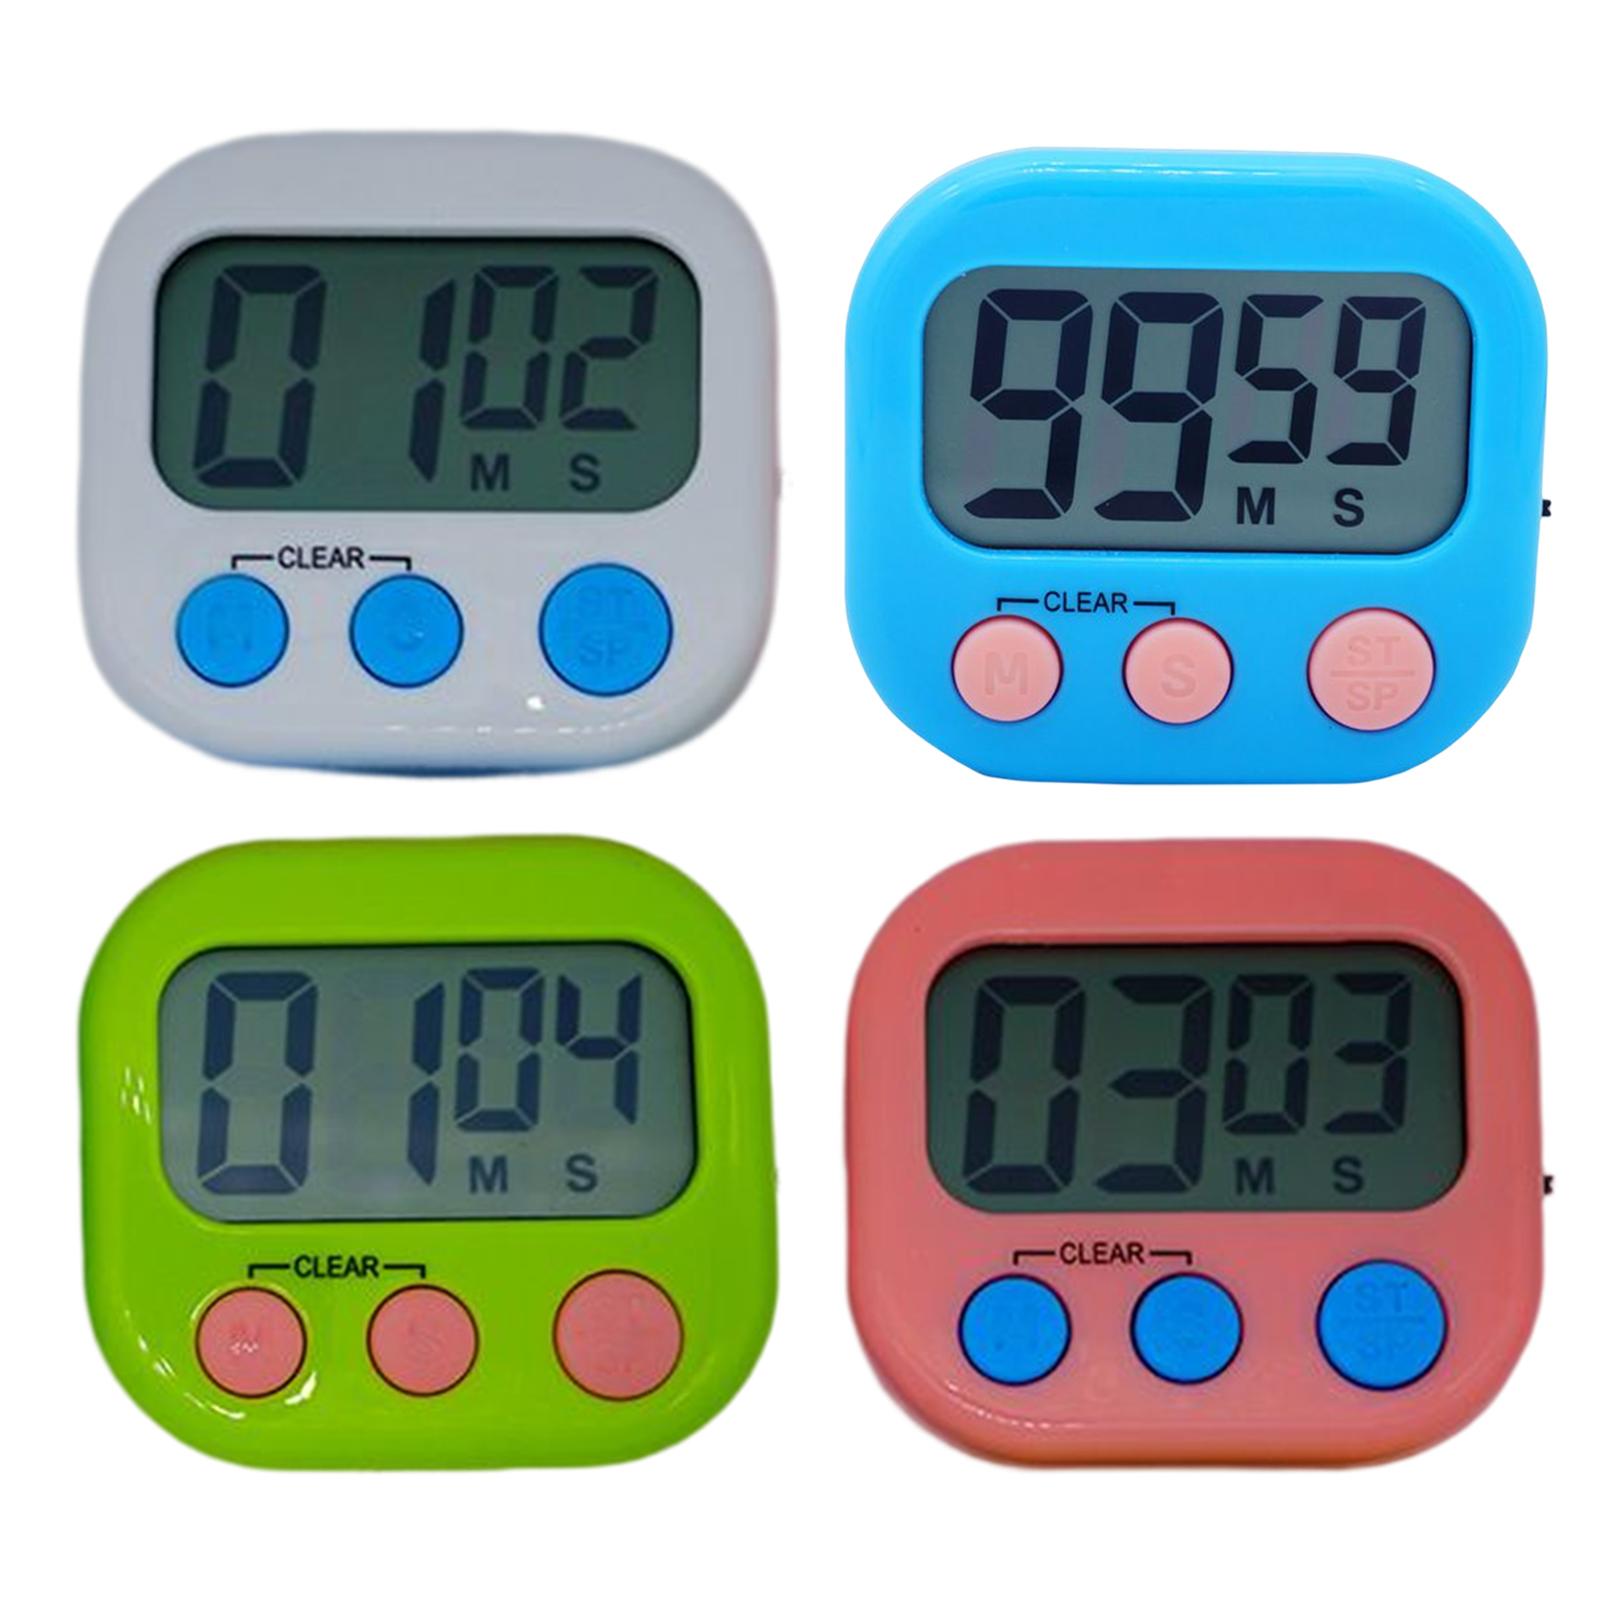 Digital Timer LCD Screen Loud Alarm Classroom Timer for Teacher Supplies Baking Office Sports Games Cooking